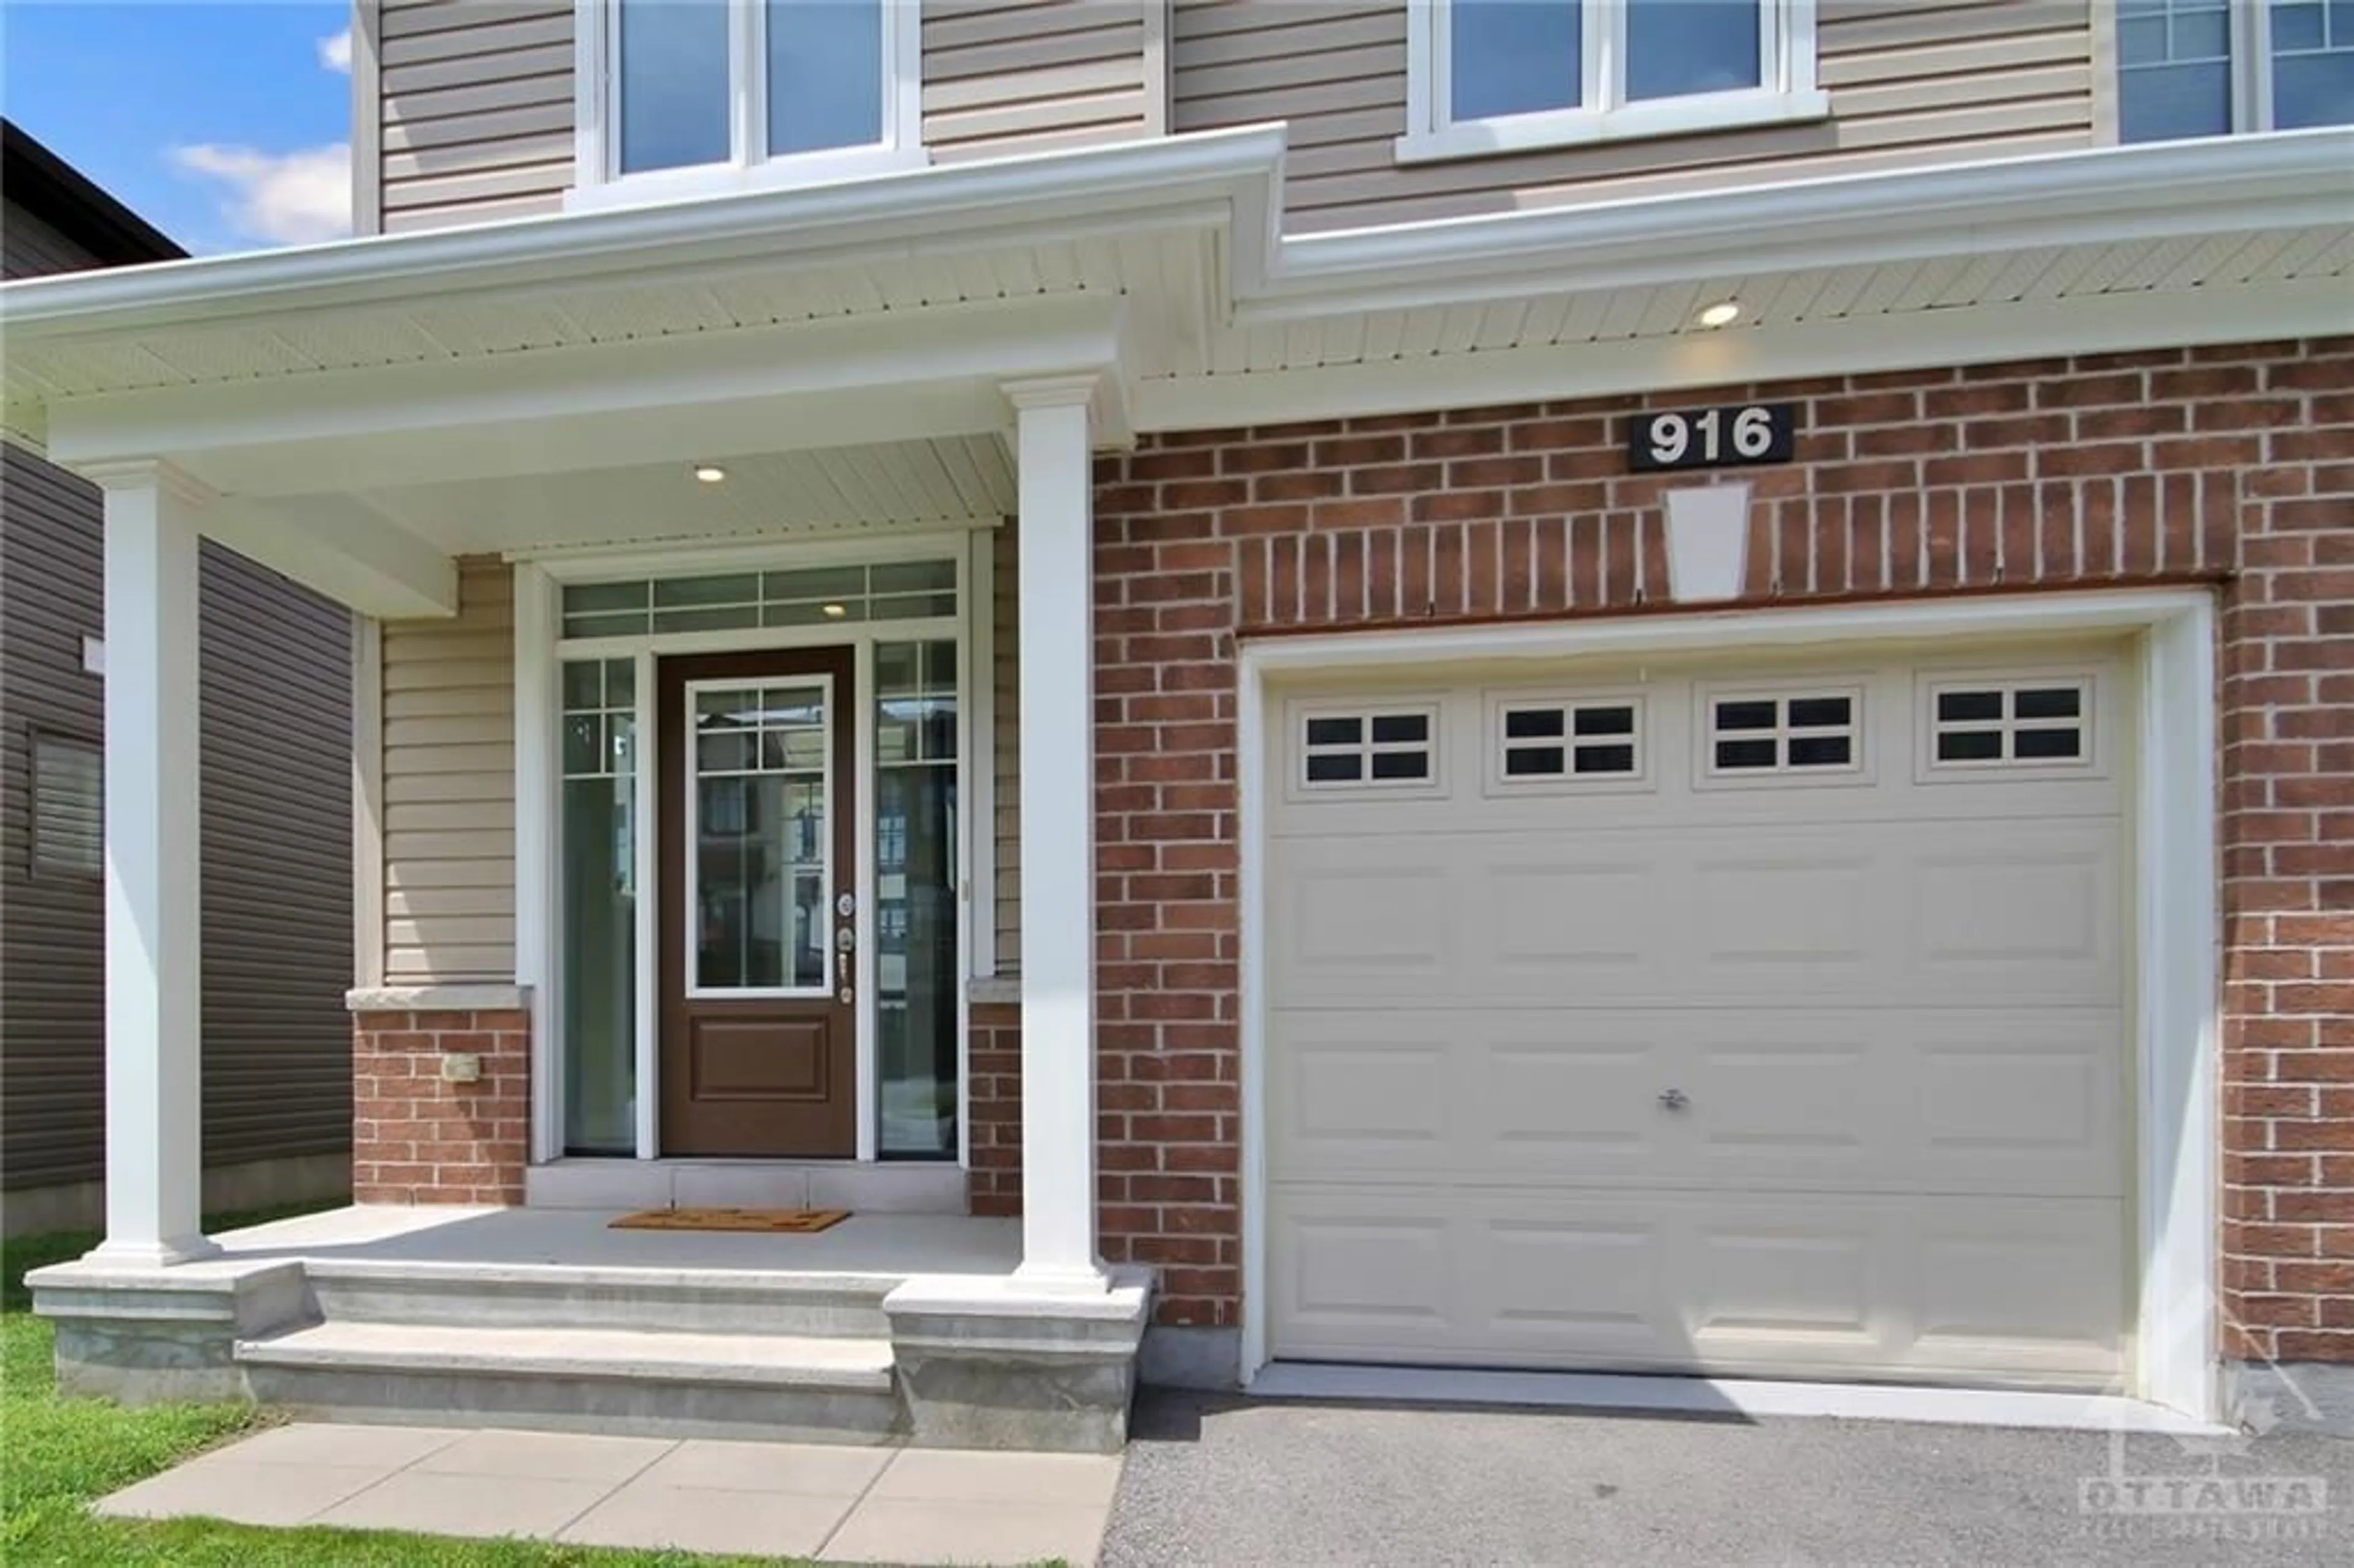 Home with brick exterior material for 916 KILBIRNIE Dr, Ottawa Ontario K2J 6G2